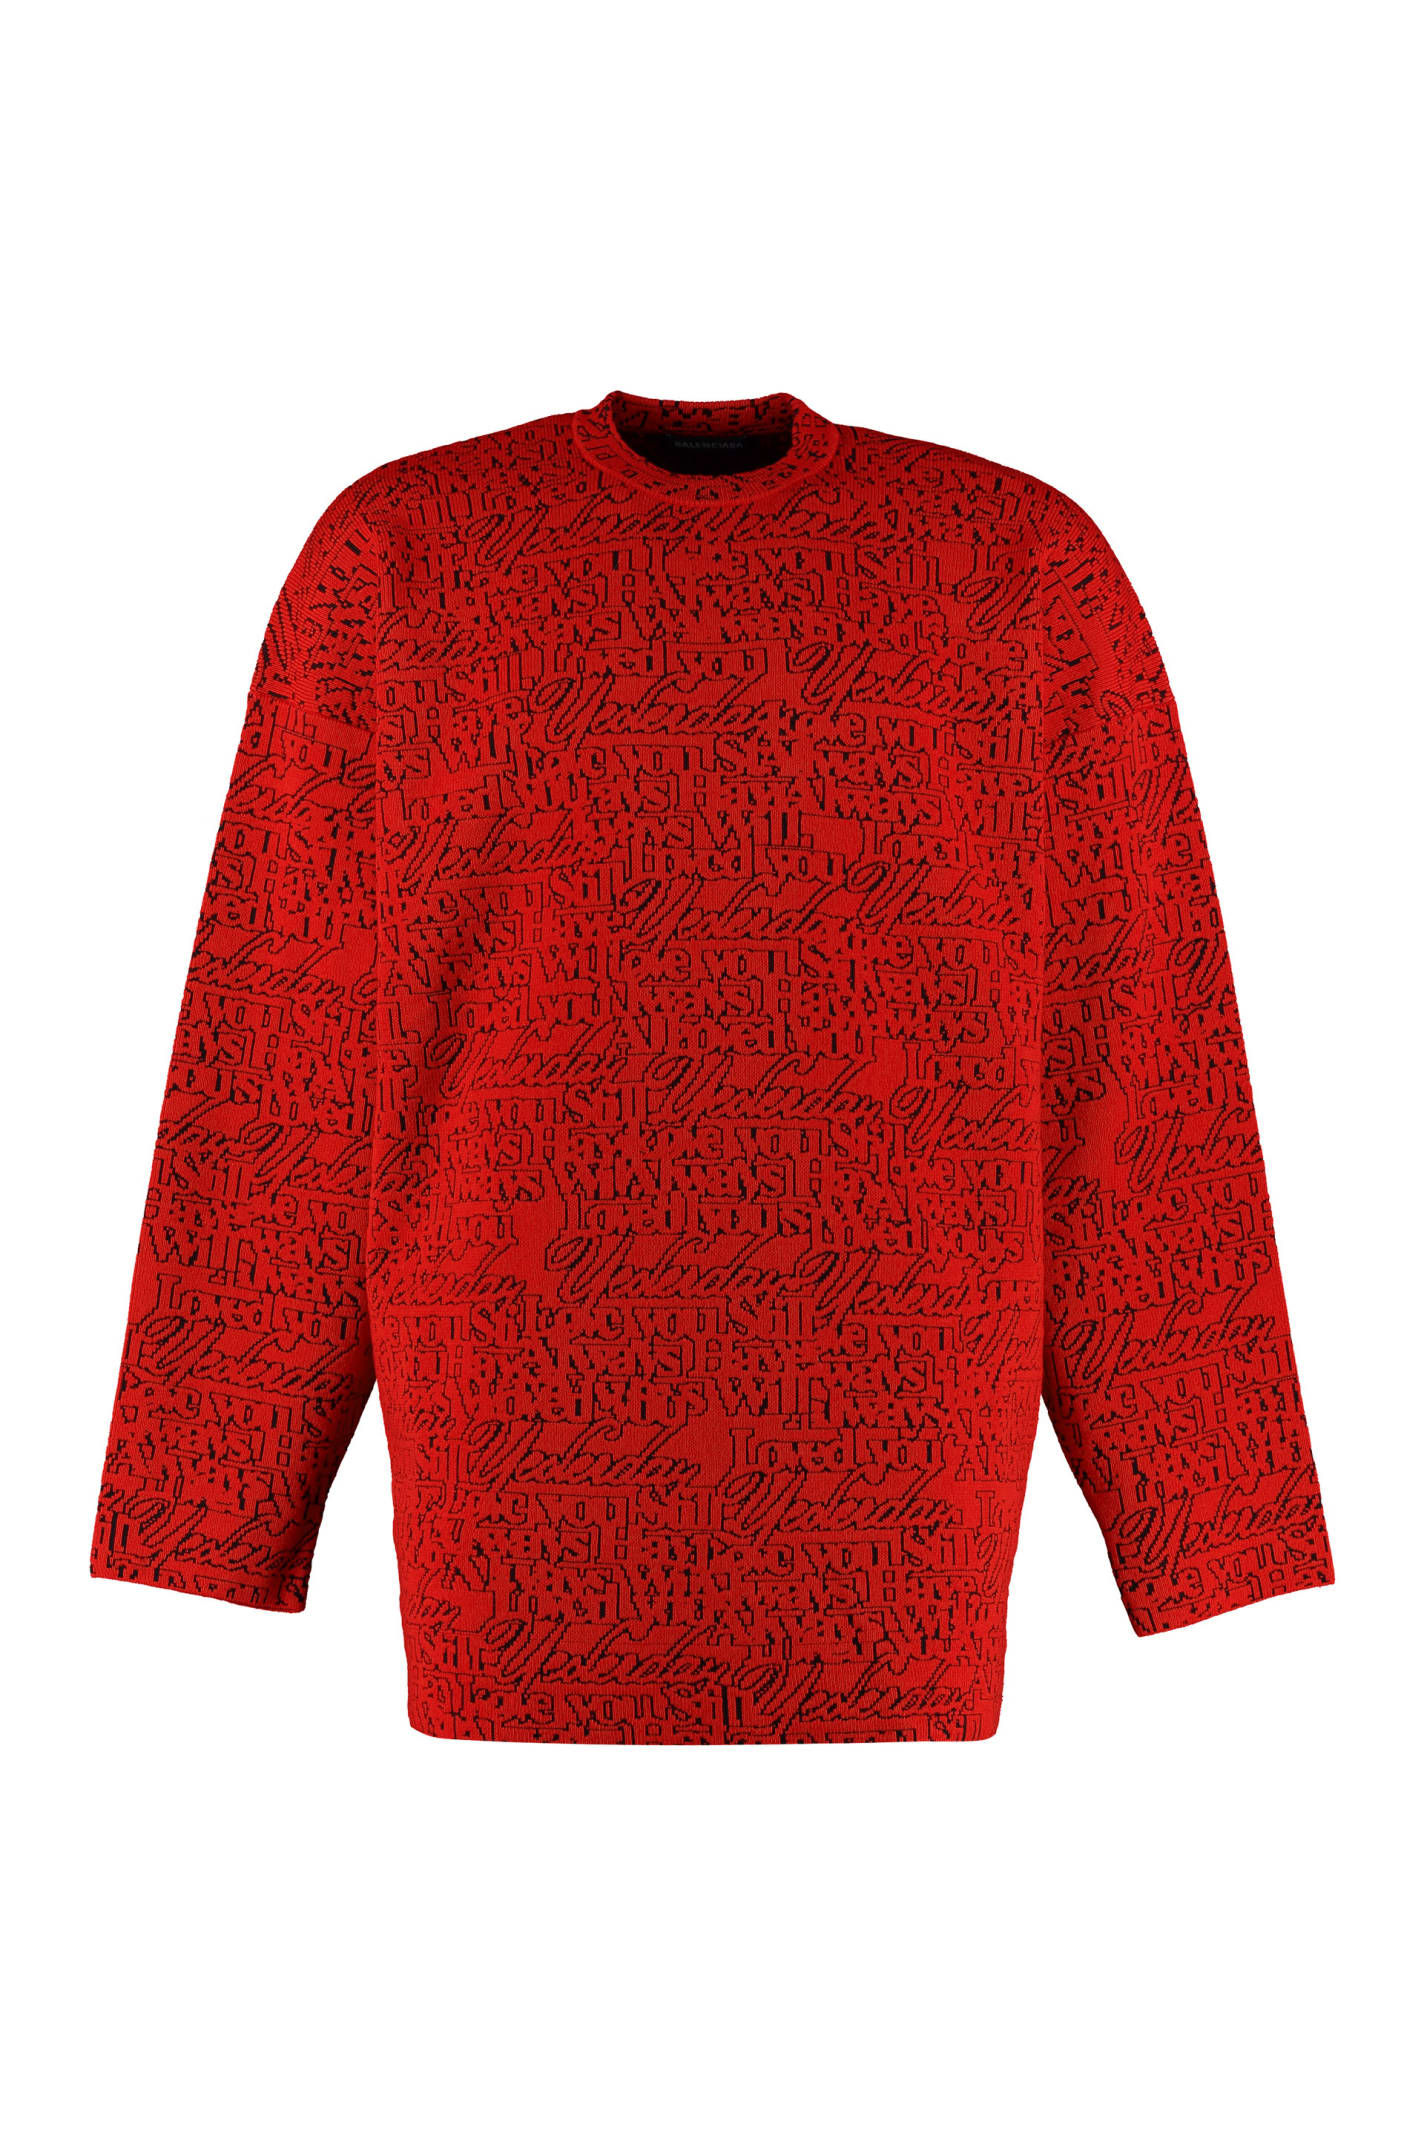 Balenciaga Jacquard Sweater